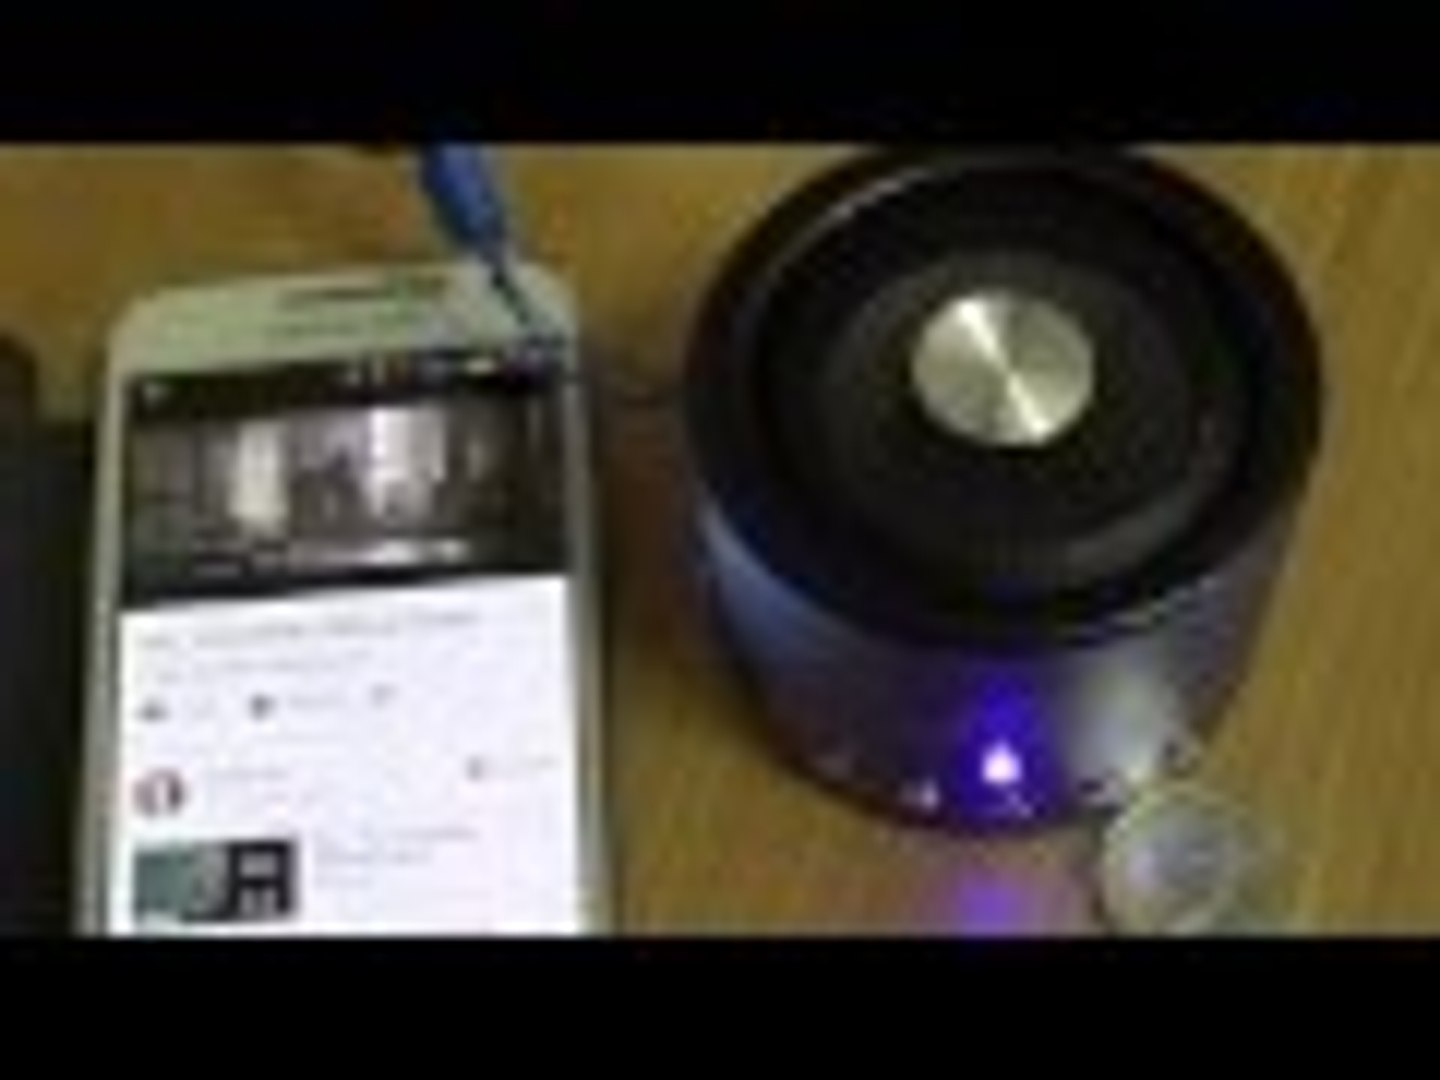 WSTER WS-Q9 - Mini Speaker Bluetooth da €9 - Recensione - Video Dailymotion